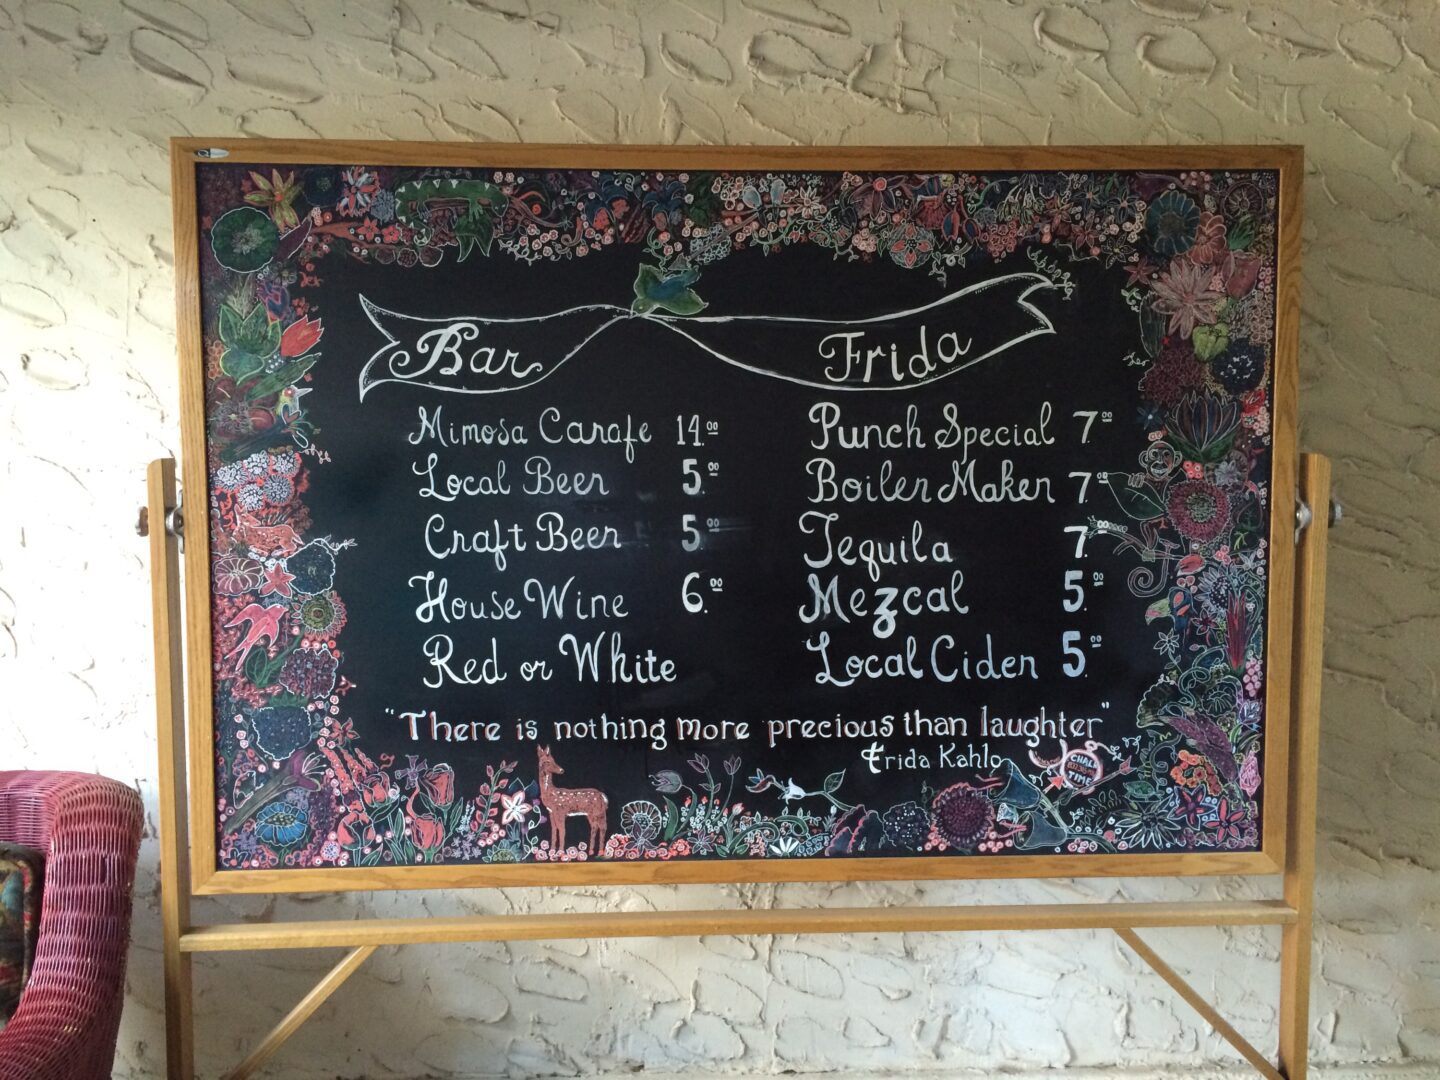 A chalkboard with a menu on it.